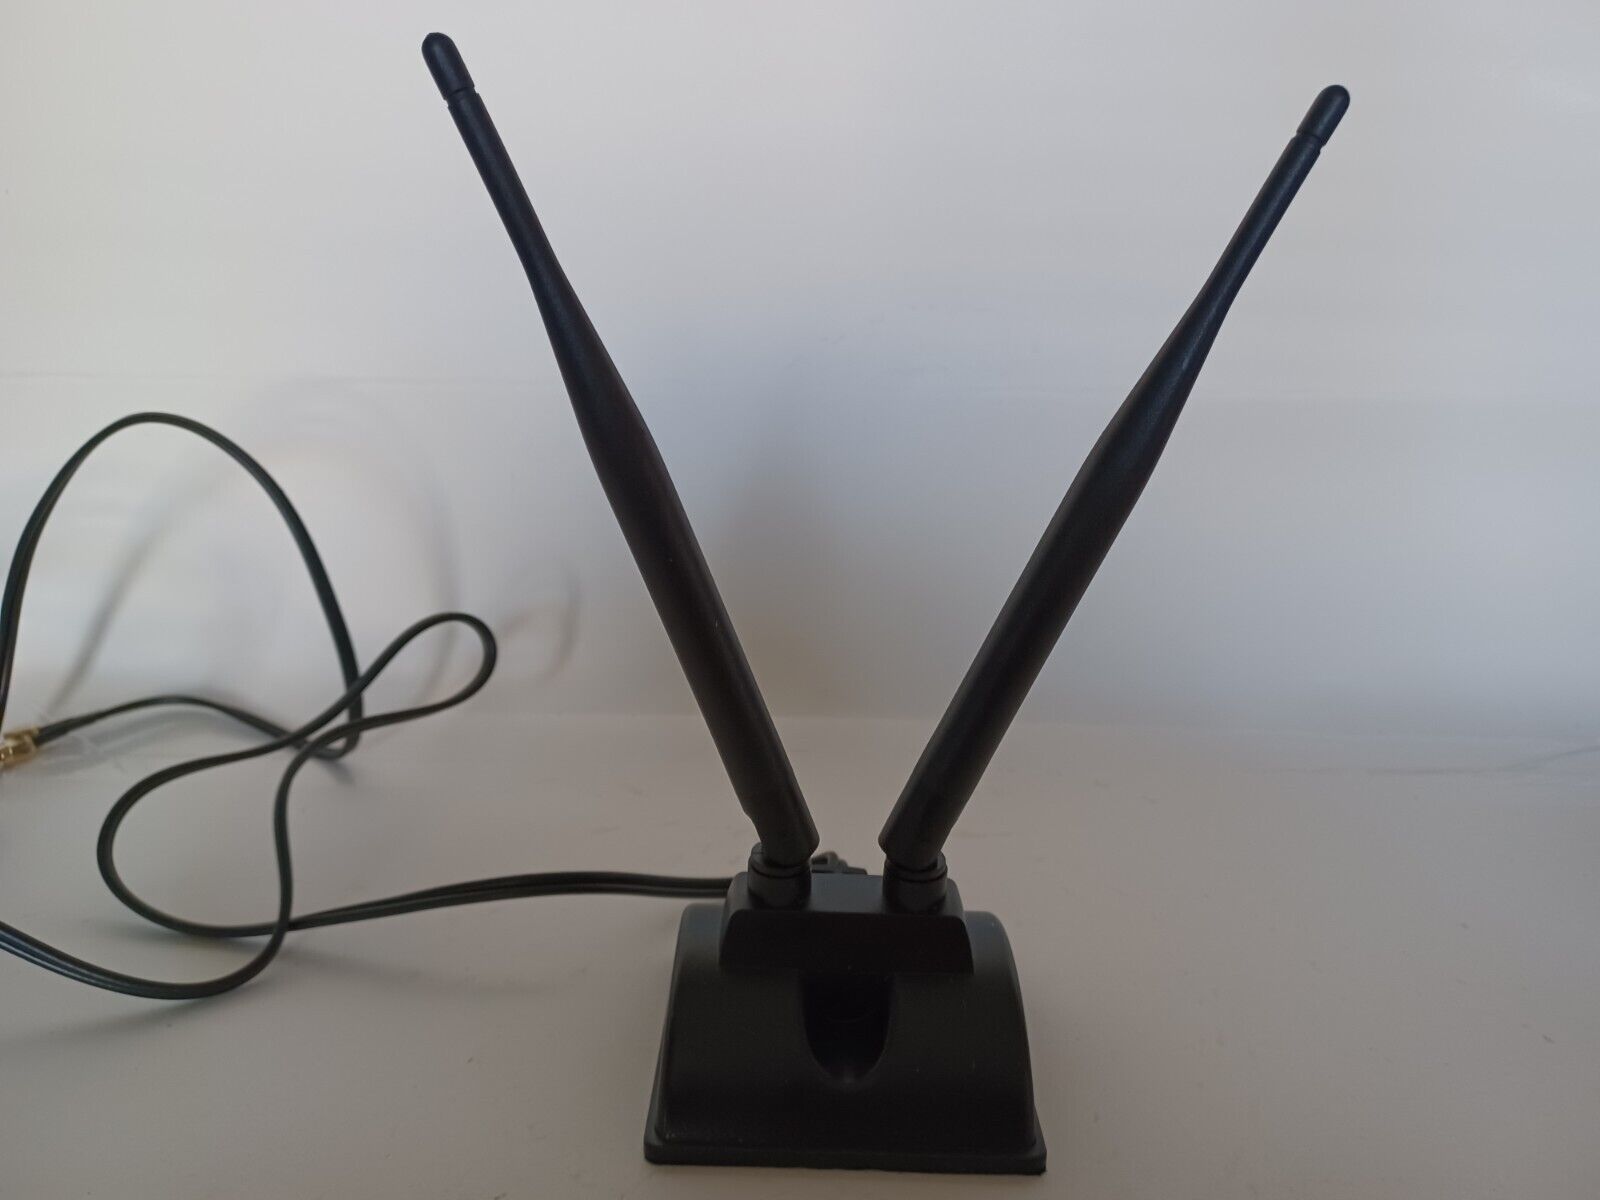 2.4G/5G Dual-Band Antenna with Base Wireless Network Card WIFI SMA Antenna